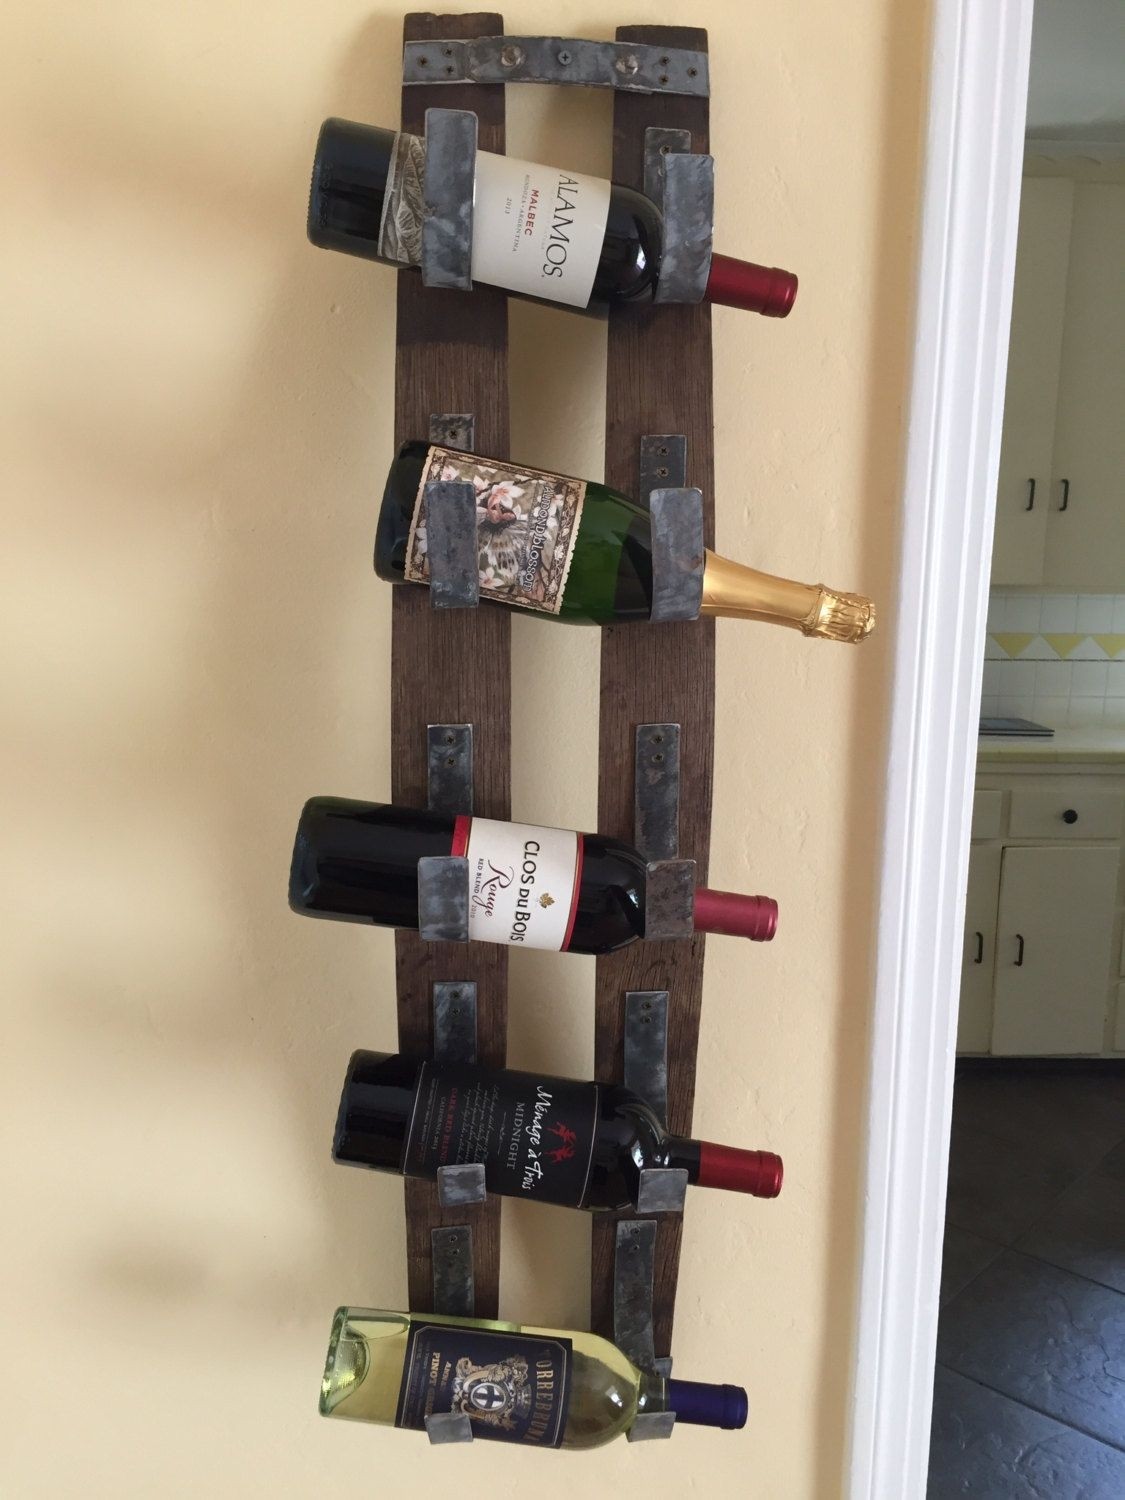 I really like this hanging wine rack wine rack wall